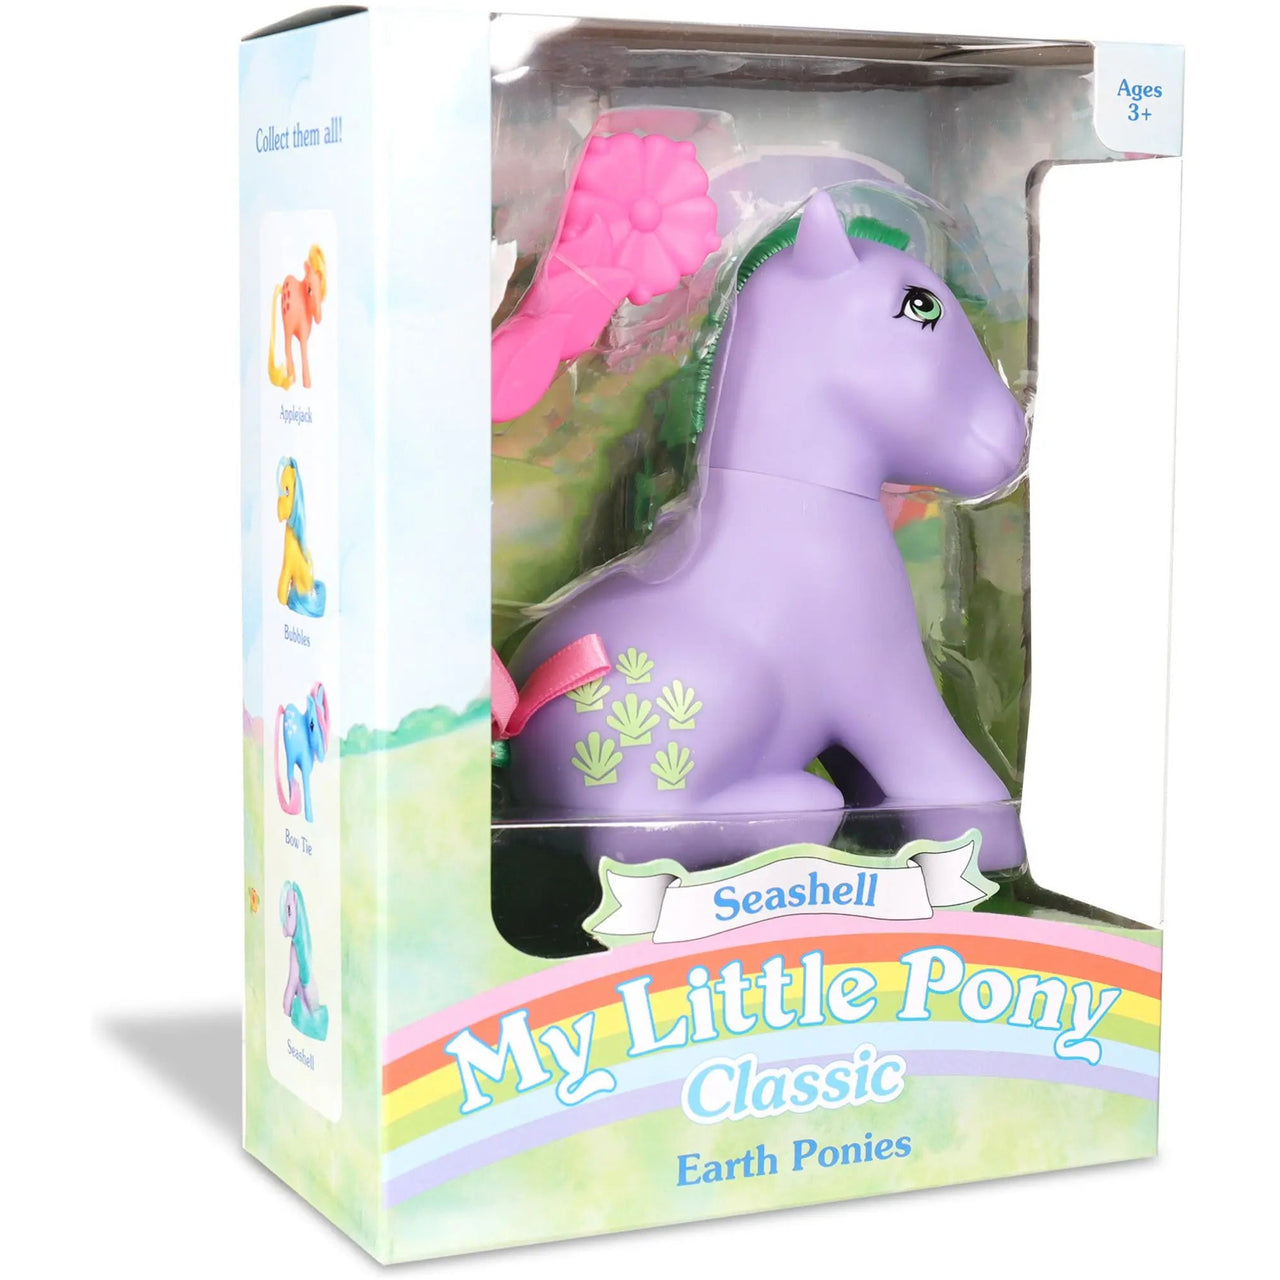 My Little Pony Classics Earth Ponies Seashell My Little Pony